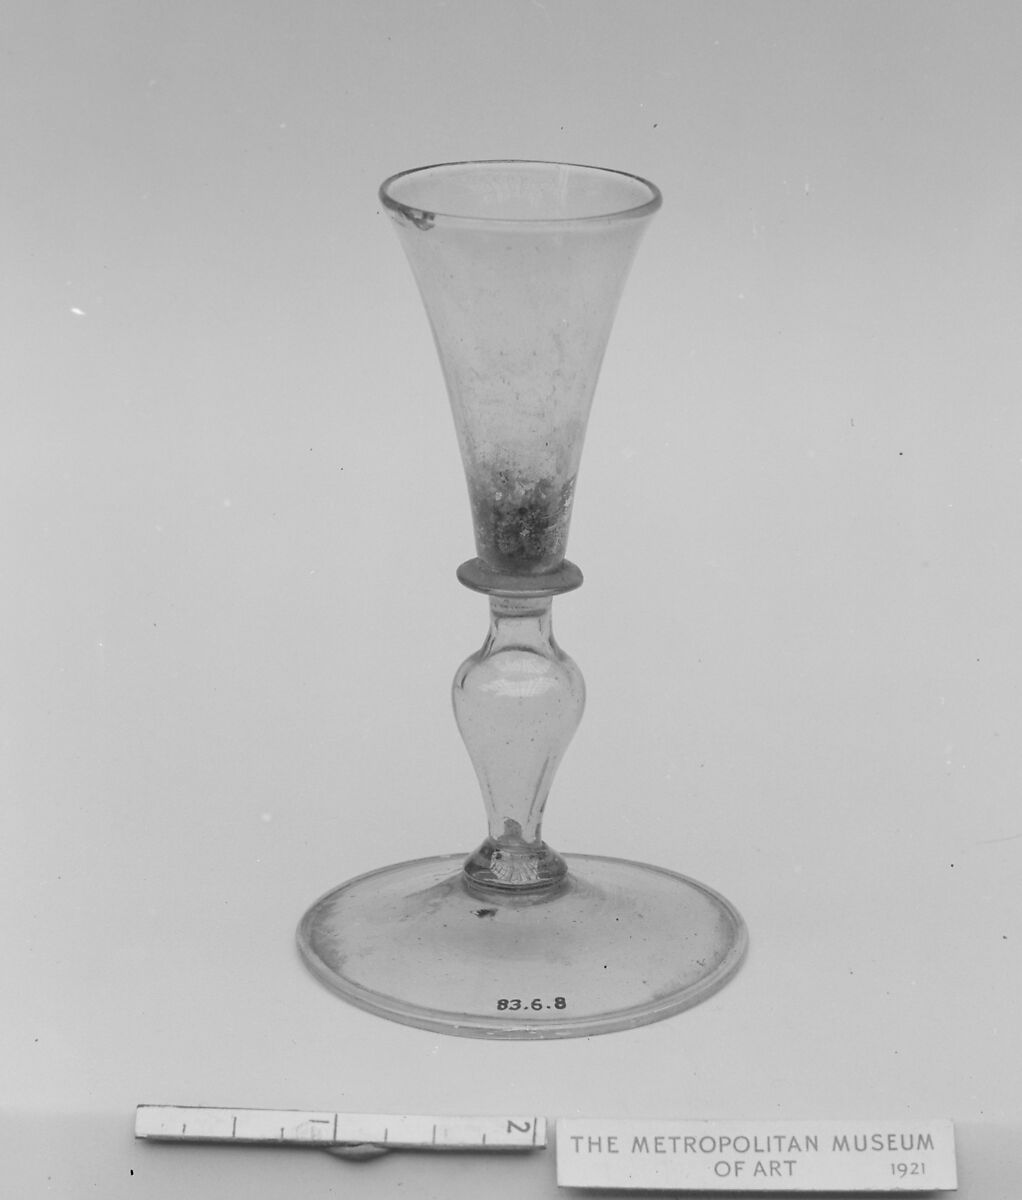 Cordial glass, Glass, Italian, probably Venice 